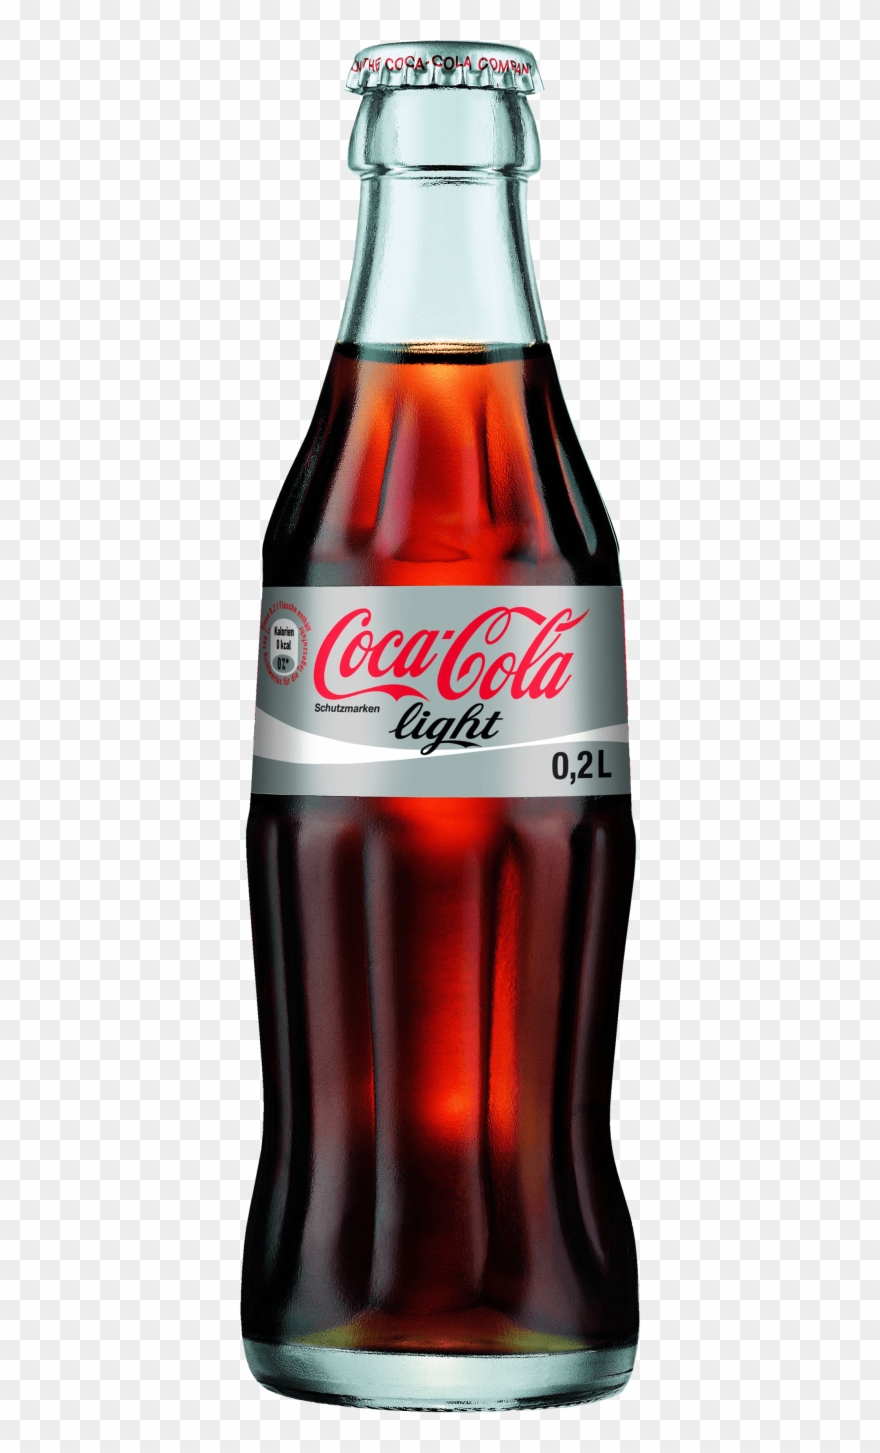 Coca Cola Bottle Png Image.